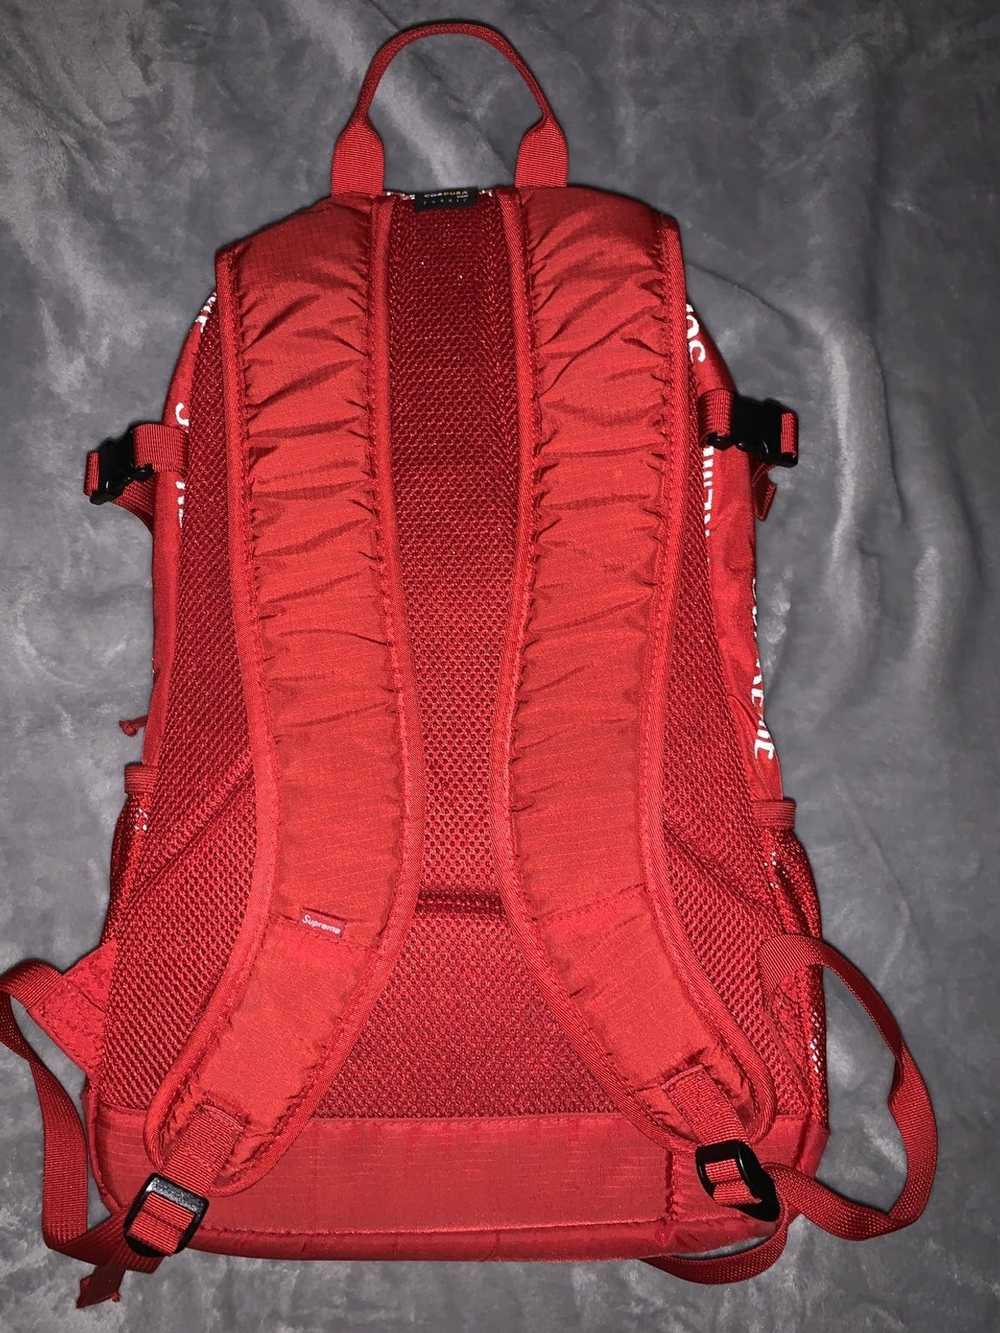 Supreme Supreme 3M reflective backpack FW16 - image 2